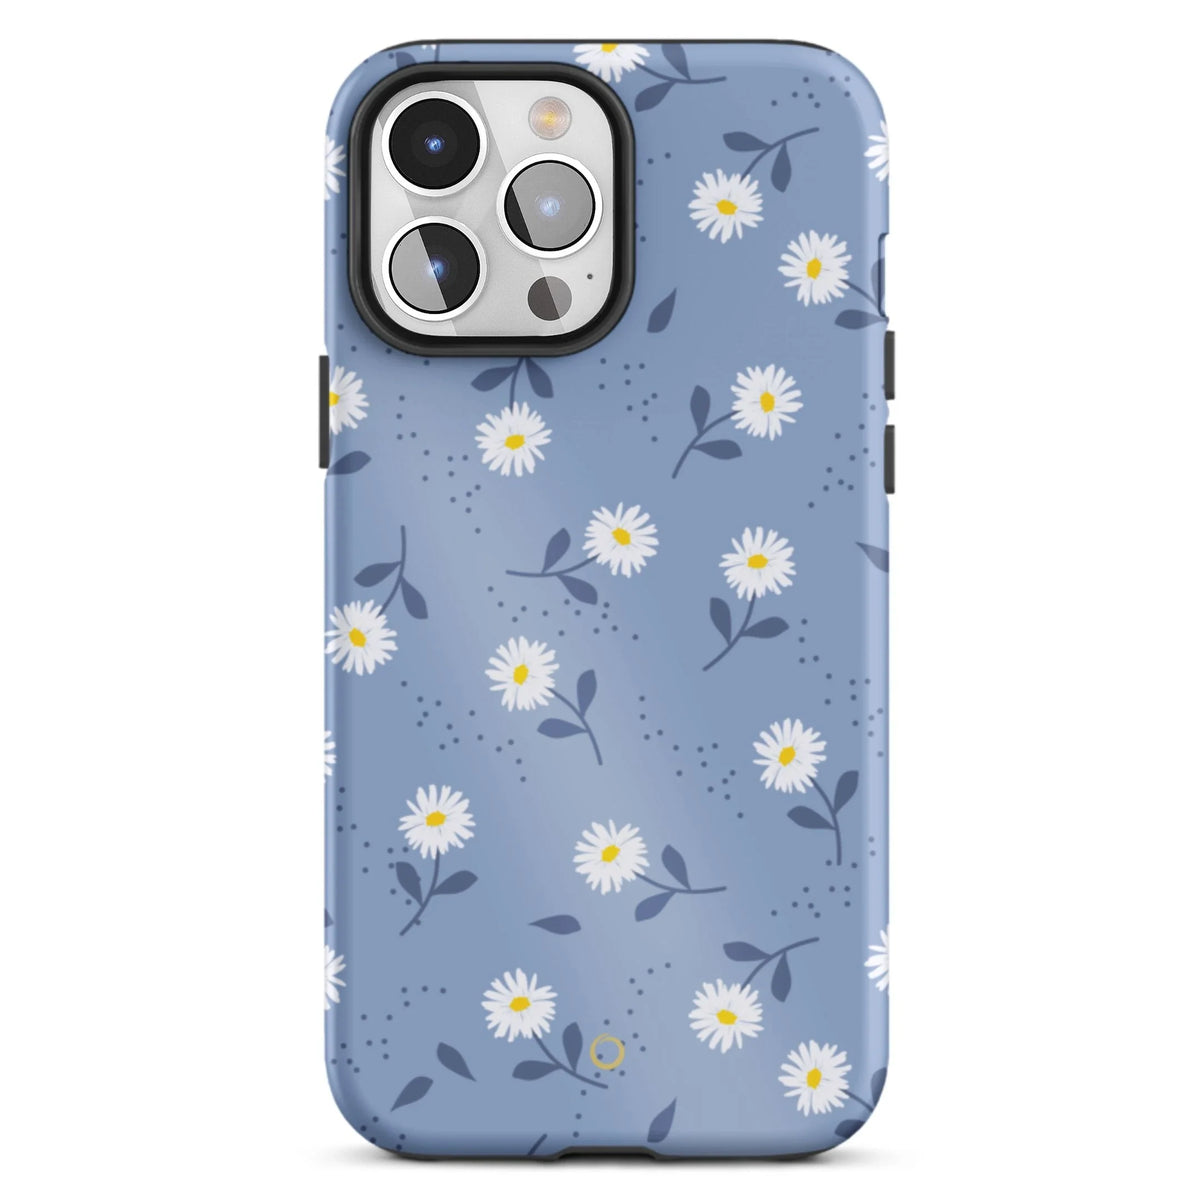 Daisy Dream iPhone Case - iPhone 11 Pro